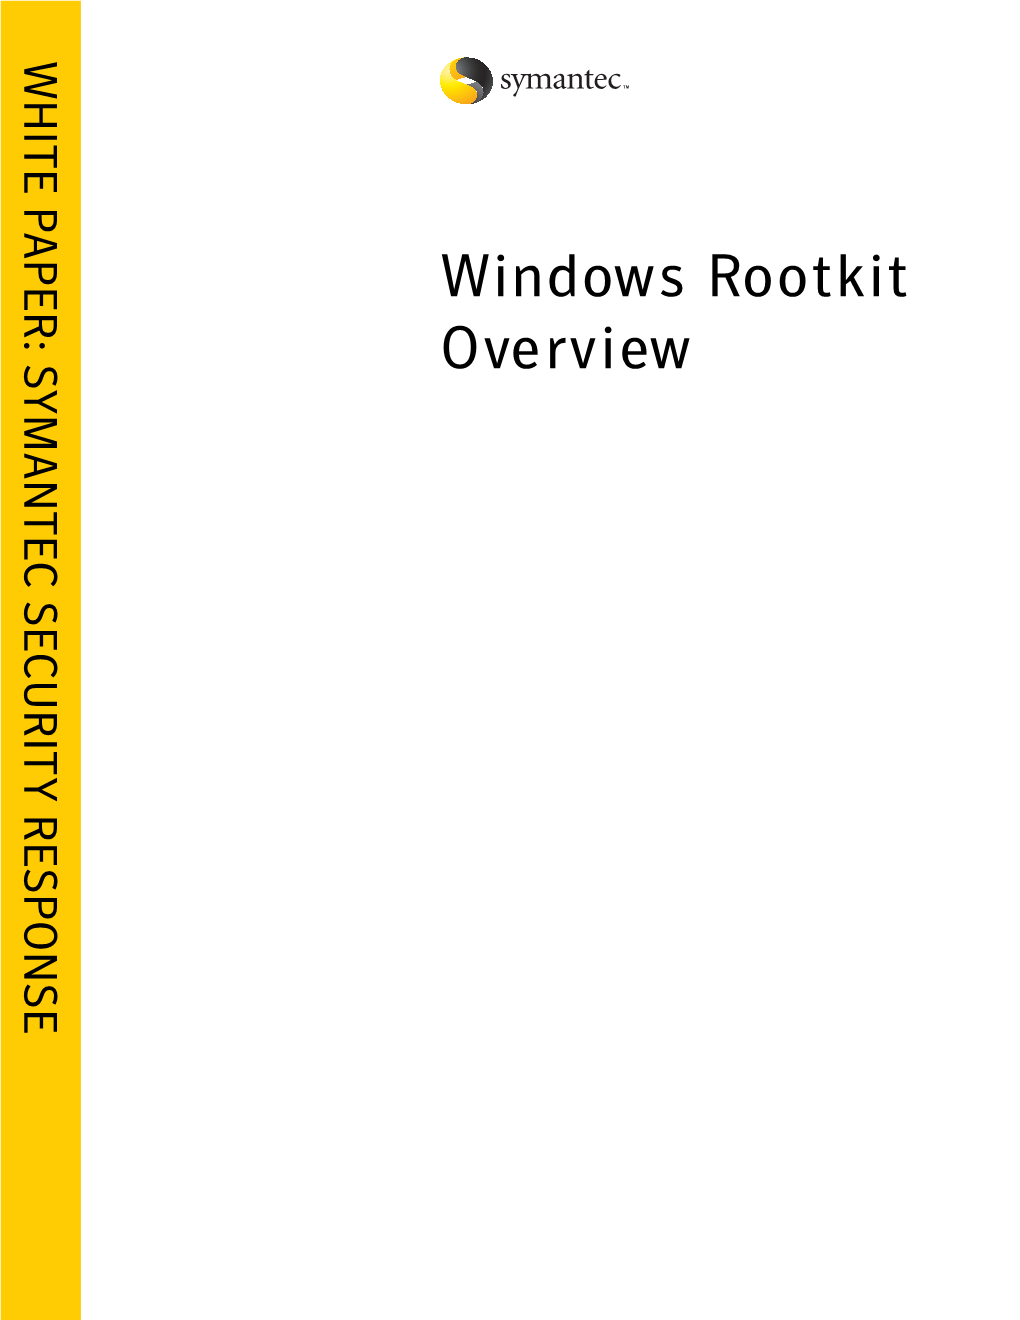 Windows Rootkit Overview